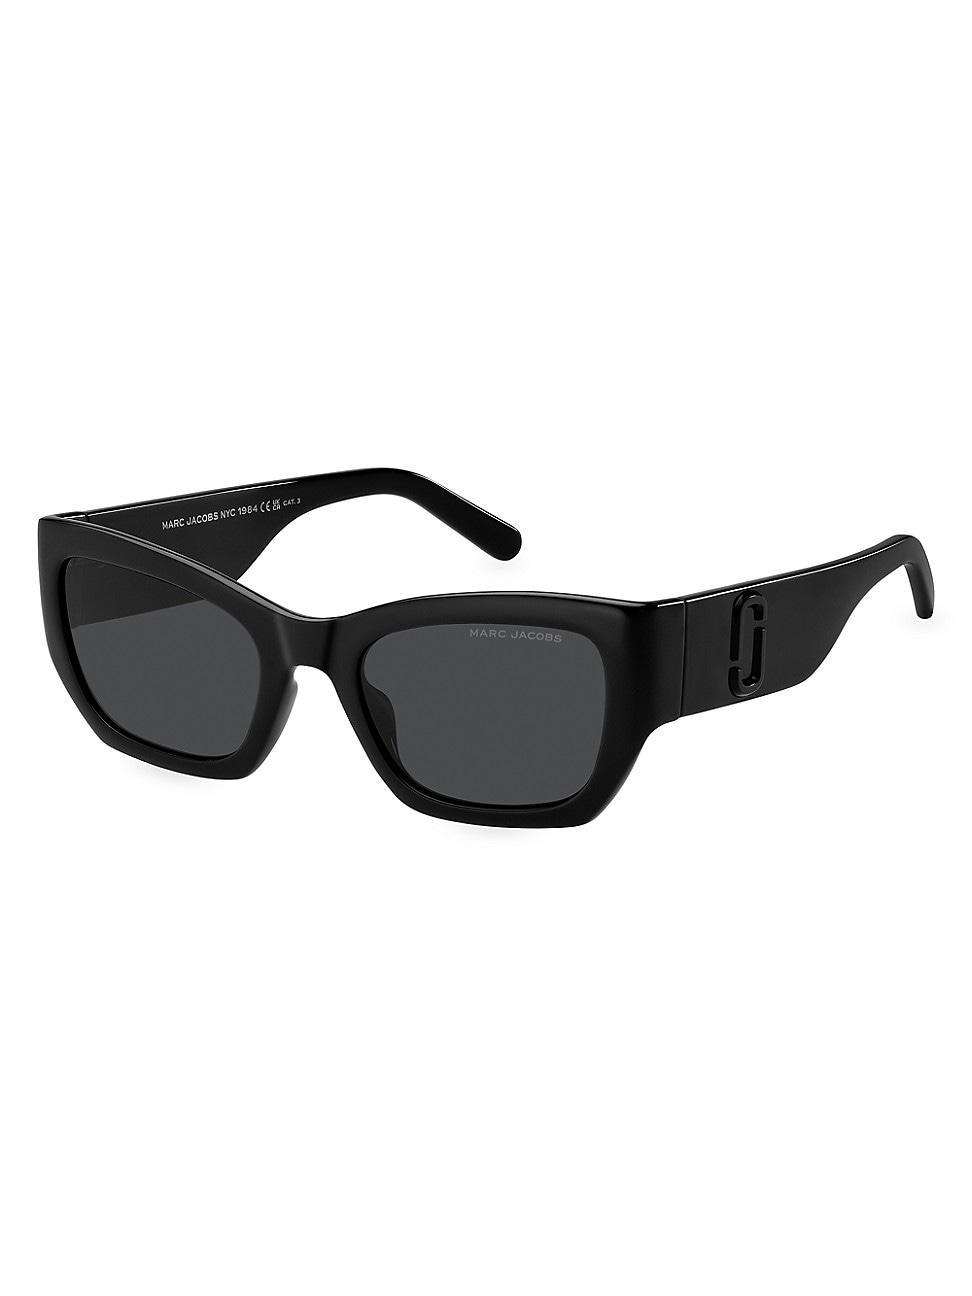 Marc Jacobs Safilo Cat Eye Sunglasses, 53mm Product Image